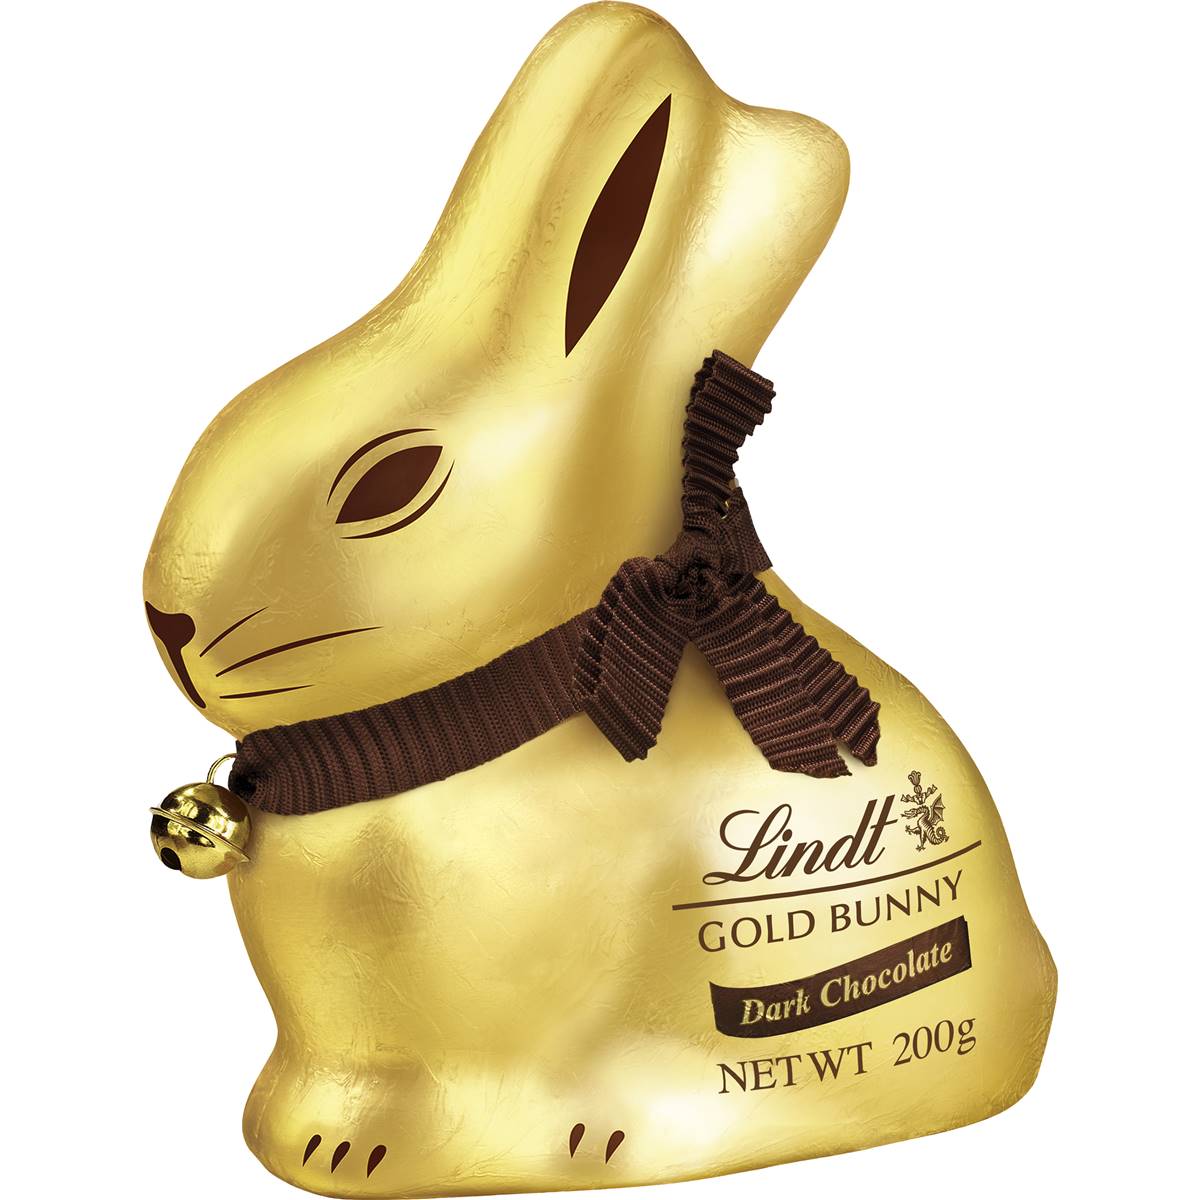 Calories in Lindt Dark Chocolate Gold Bunny Dark Chocolate